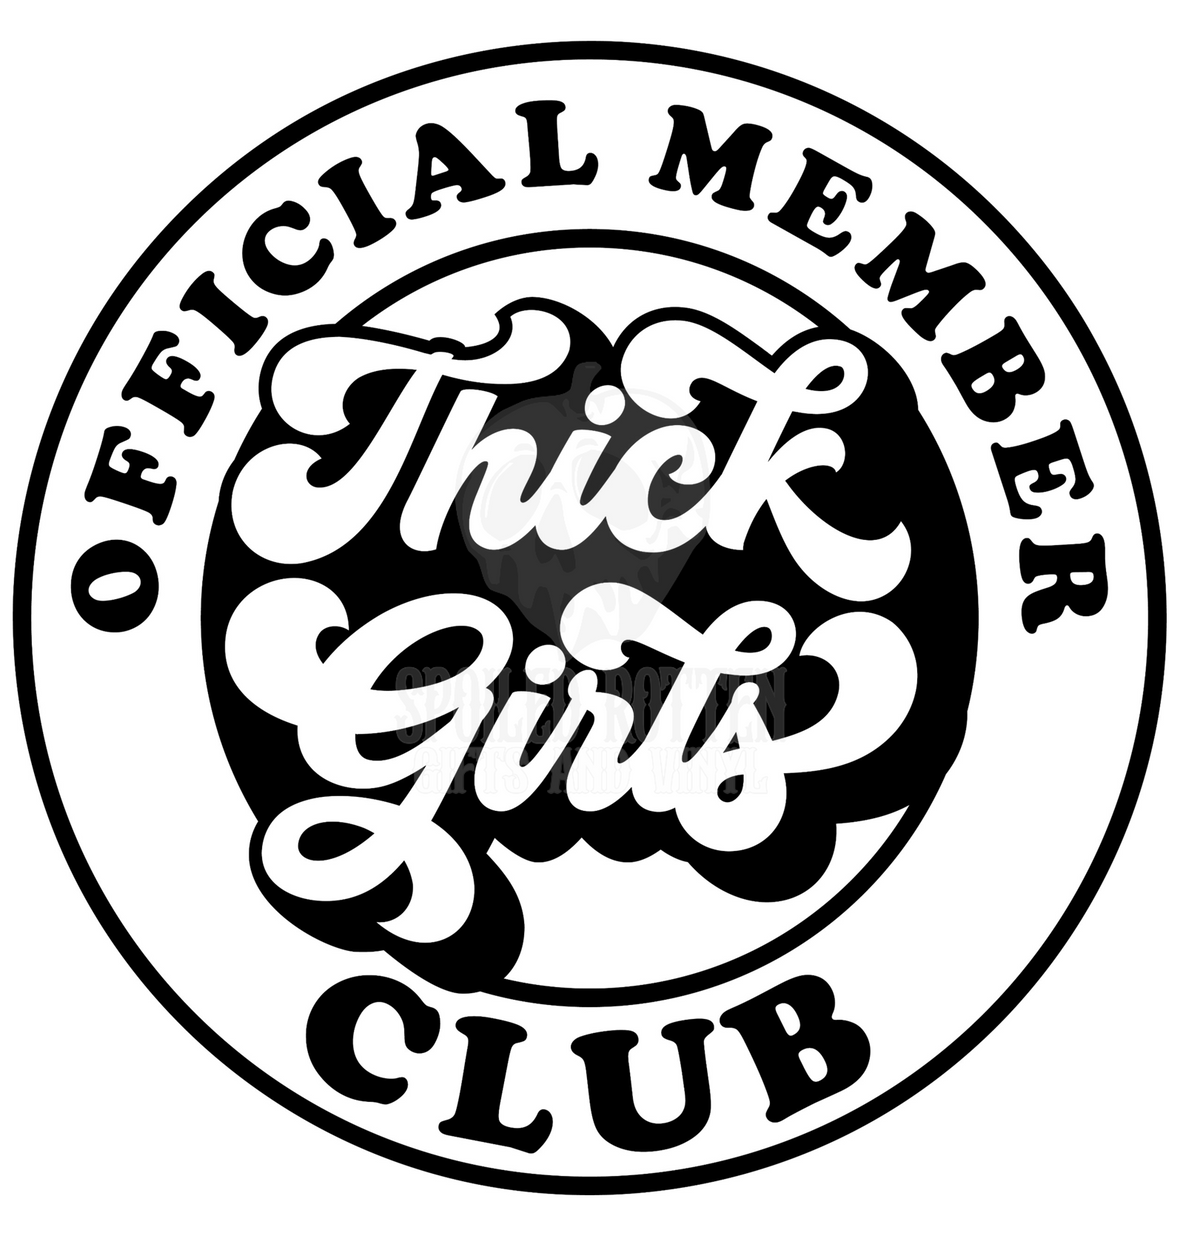 Office Member Thick Girls Club vinyl sticker